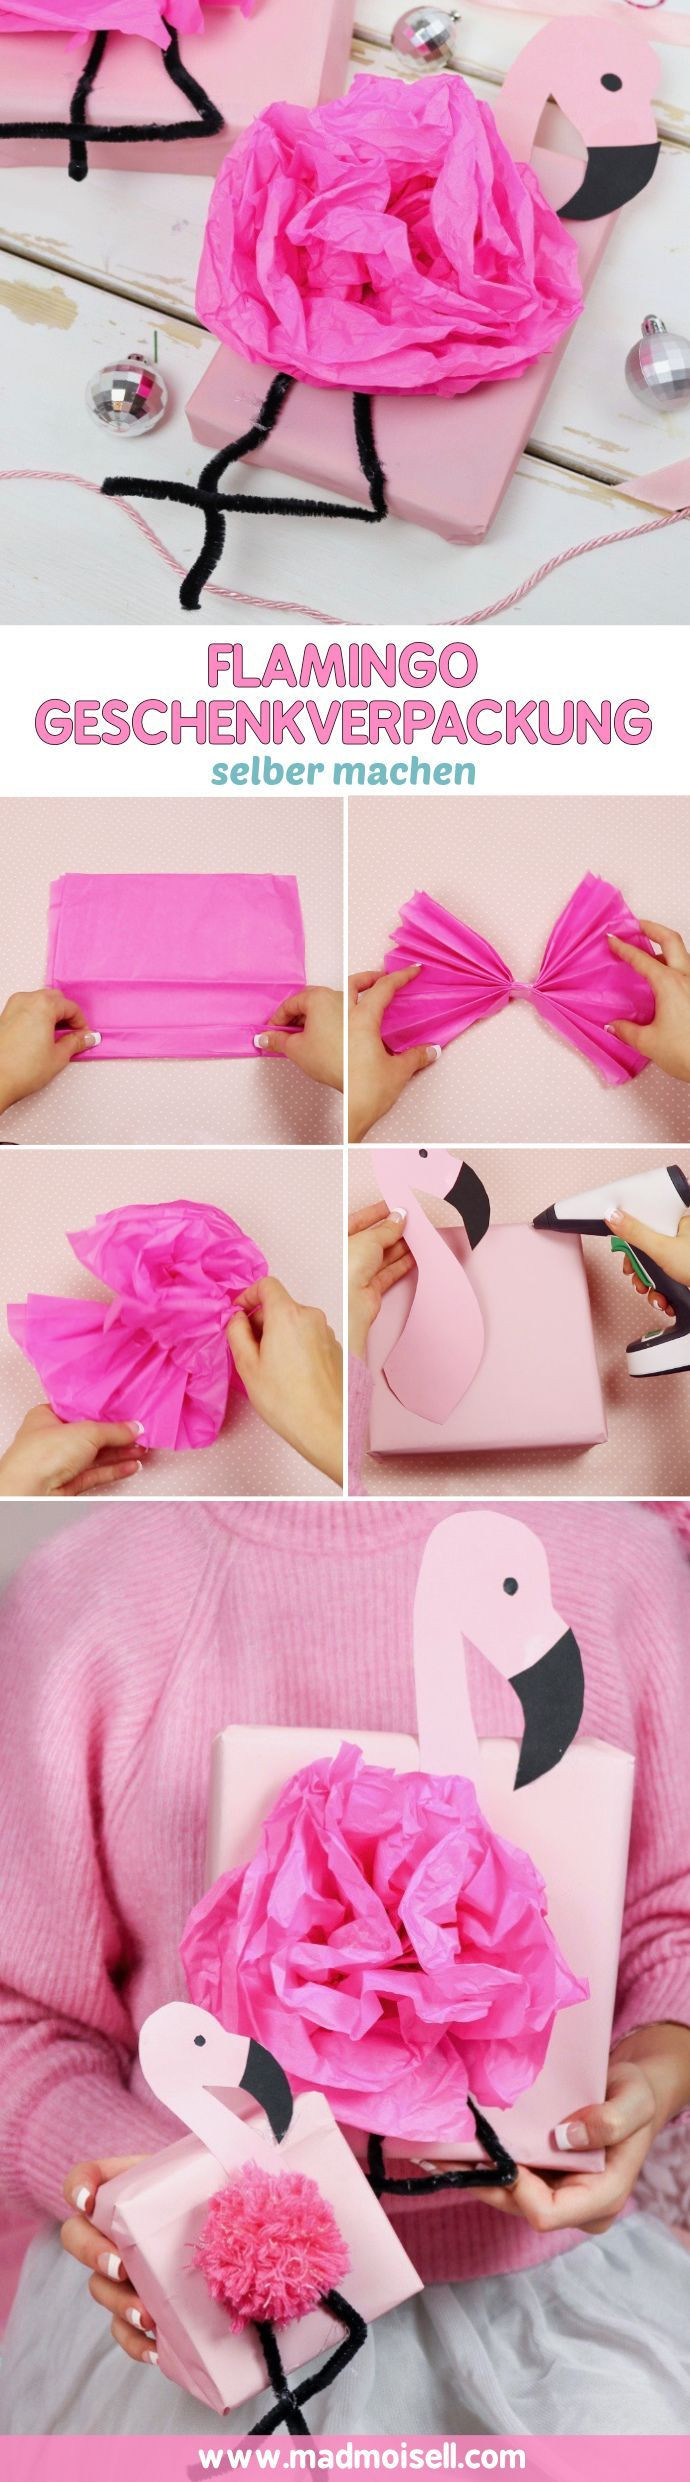 Flamingo Geschenke
 22 besten Geschenke verpacken Bilder auf Pinterest